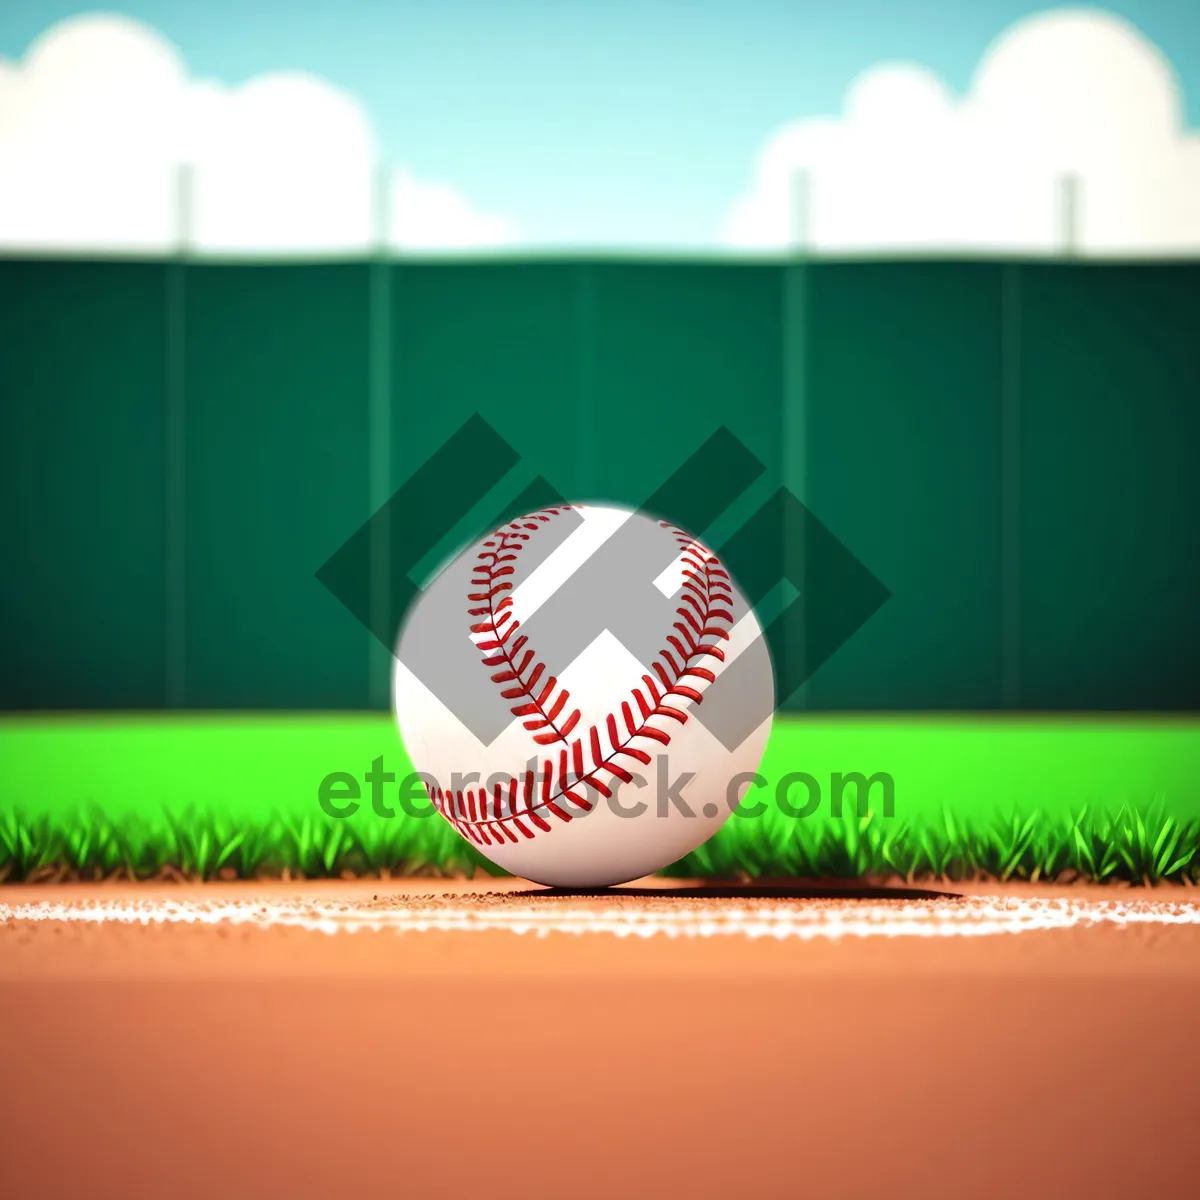 Picture of Baseball glove on grass - sport equipment